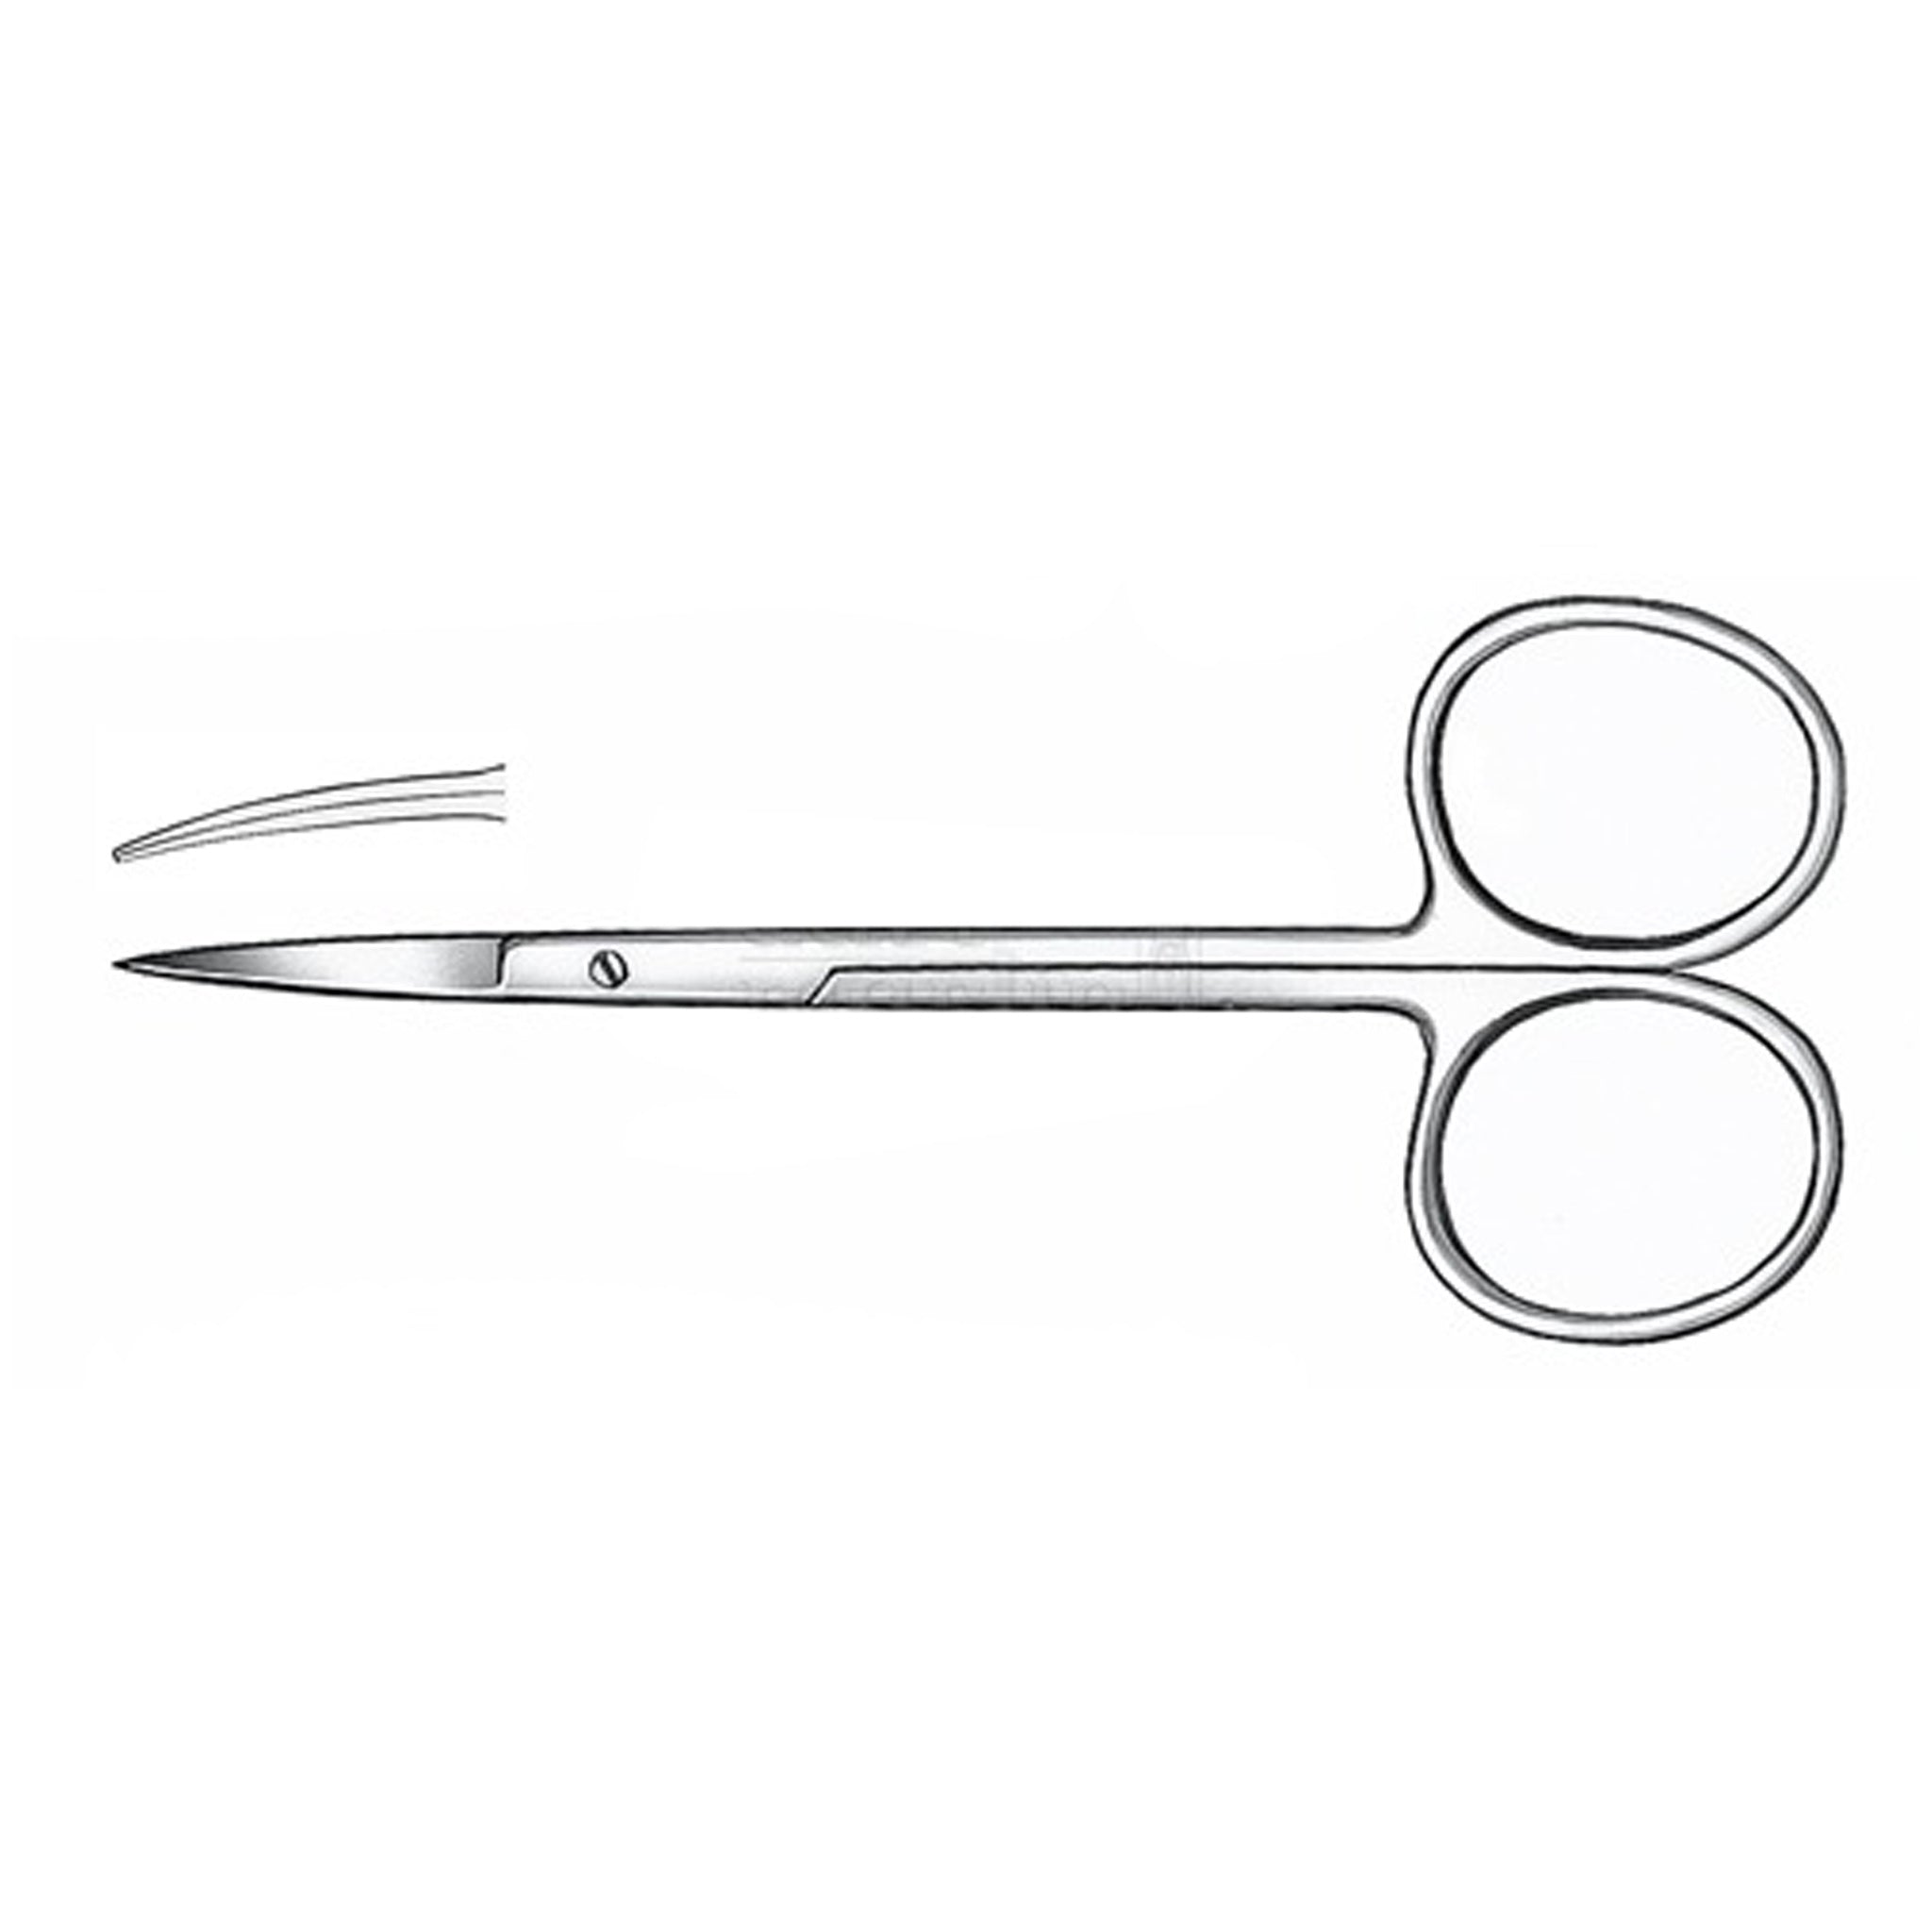 Gingival scissors curved 10.5cm